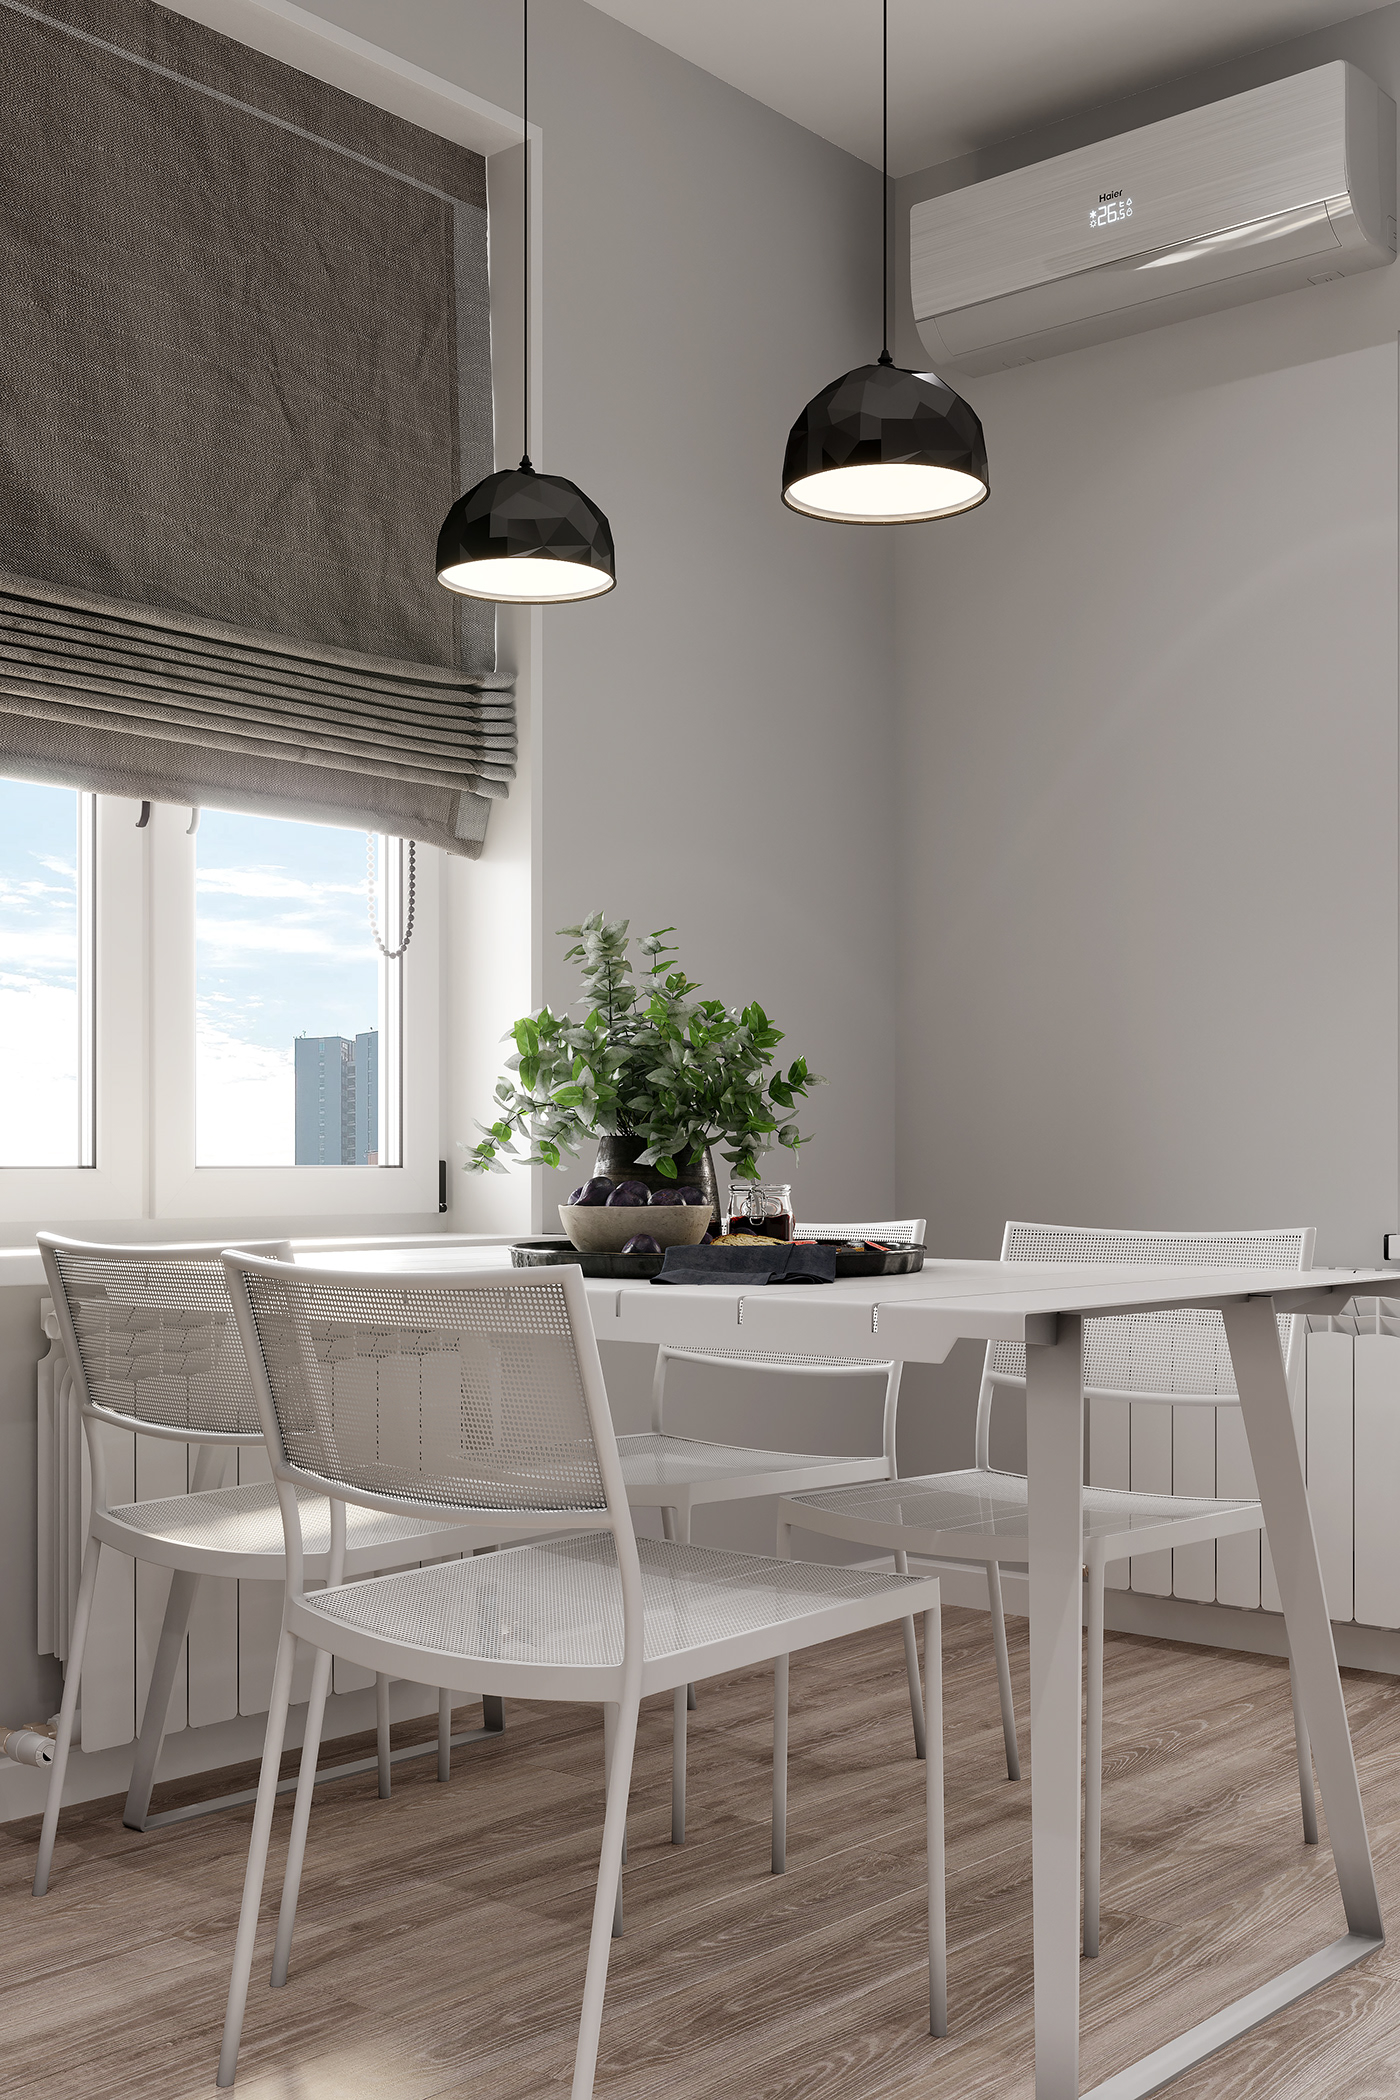 Interior interiordesign livingroom LOFT minimalistic modern Scandinavian интерьер кухня kitchen